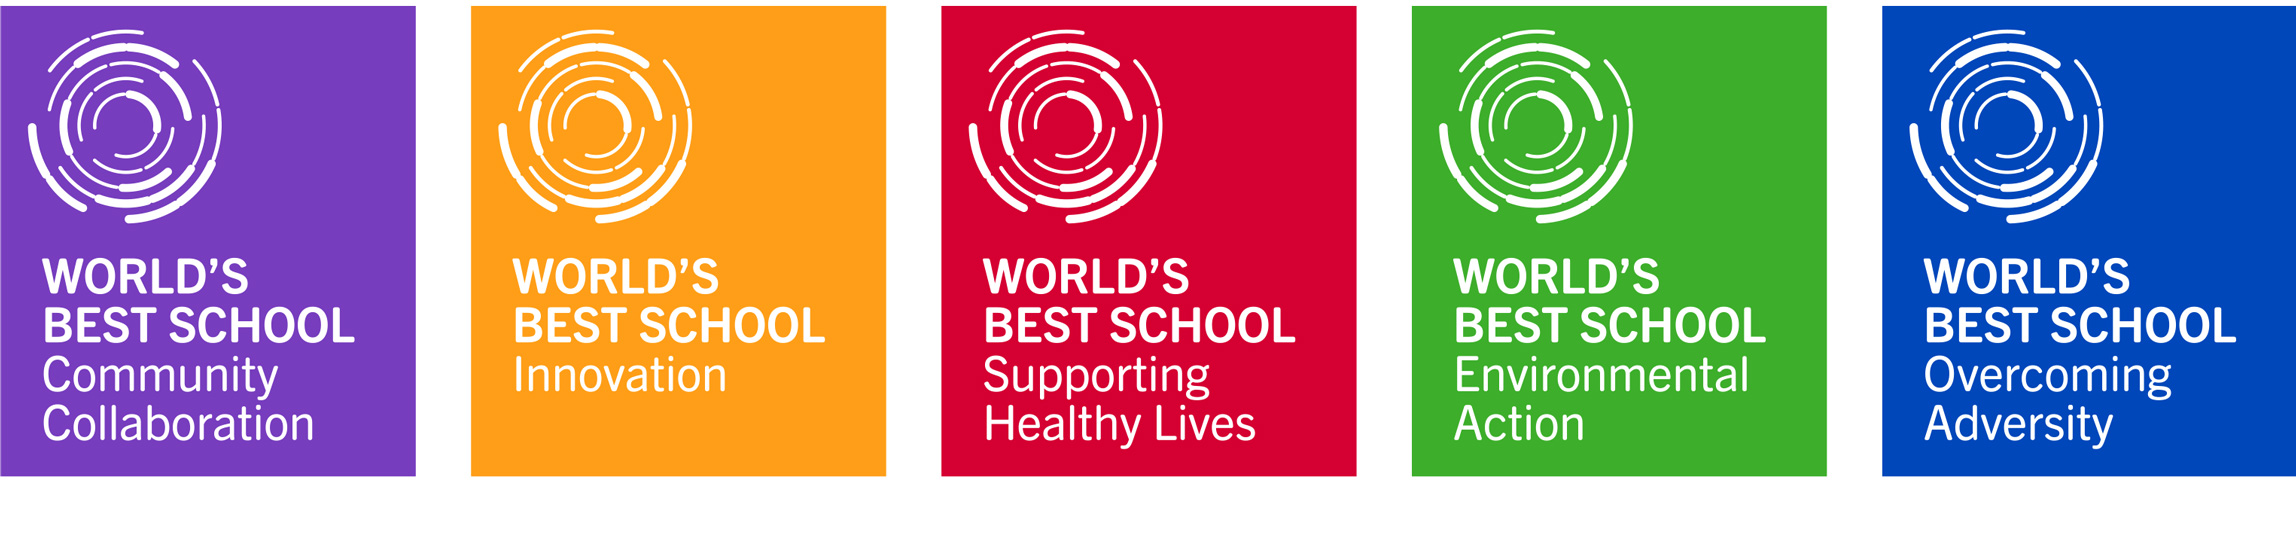 World's Best School Prizes five prizes logos